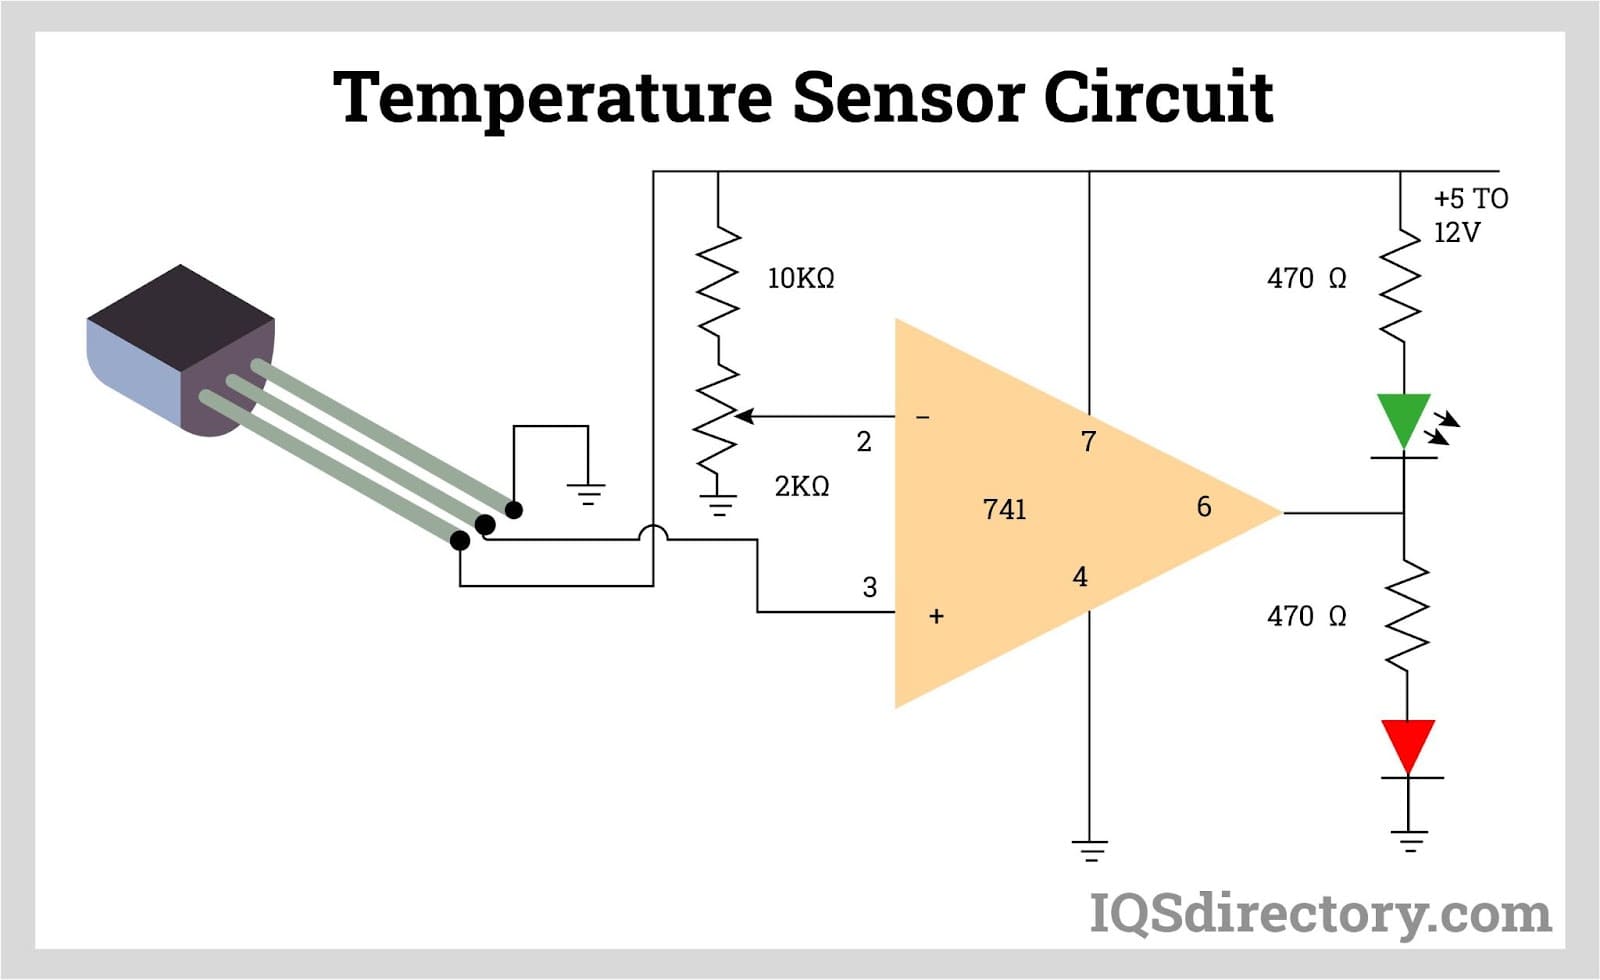 https://www.iqsdirectory.com/articles/thermocouple/temperature-sensors/temperature-sensor-circuit.jpg